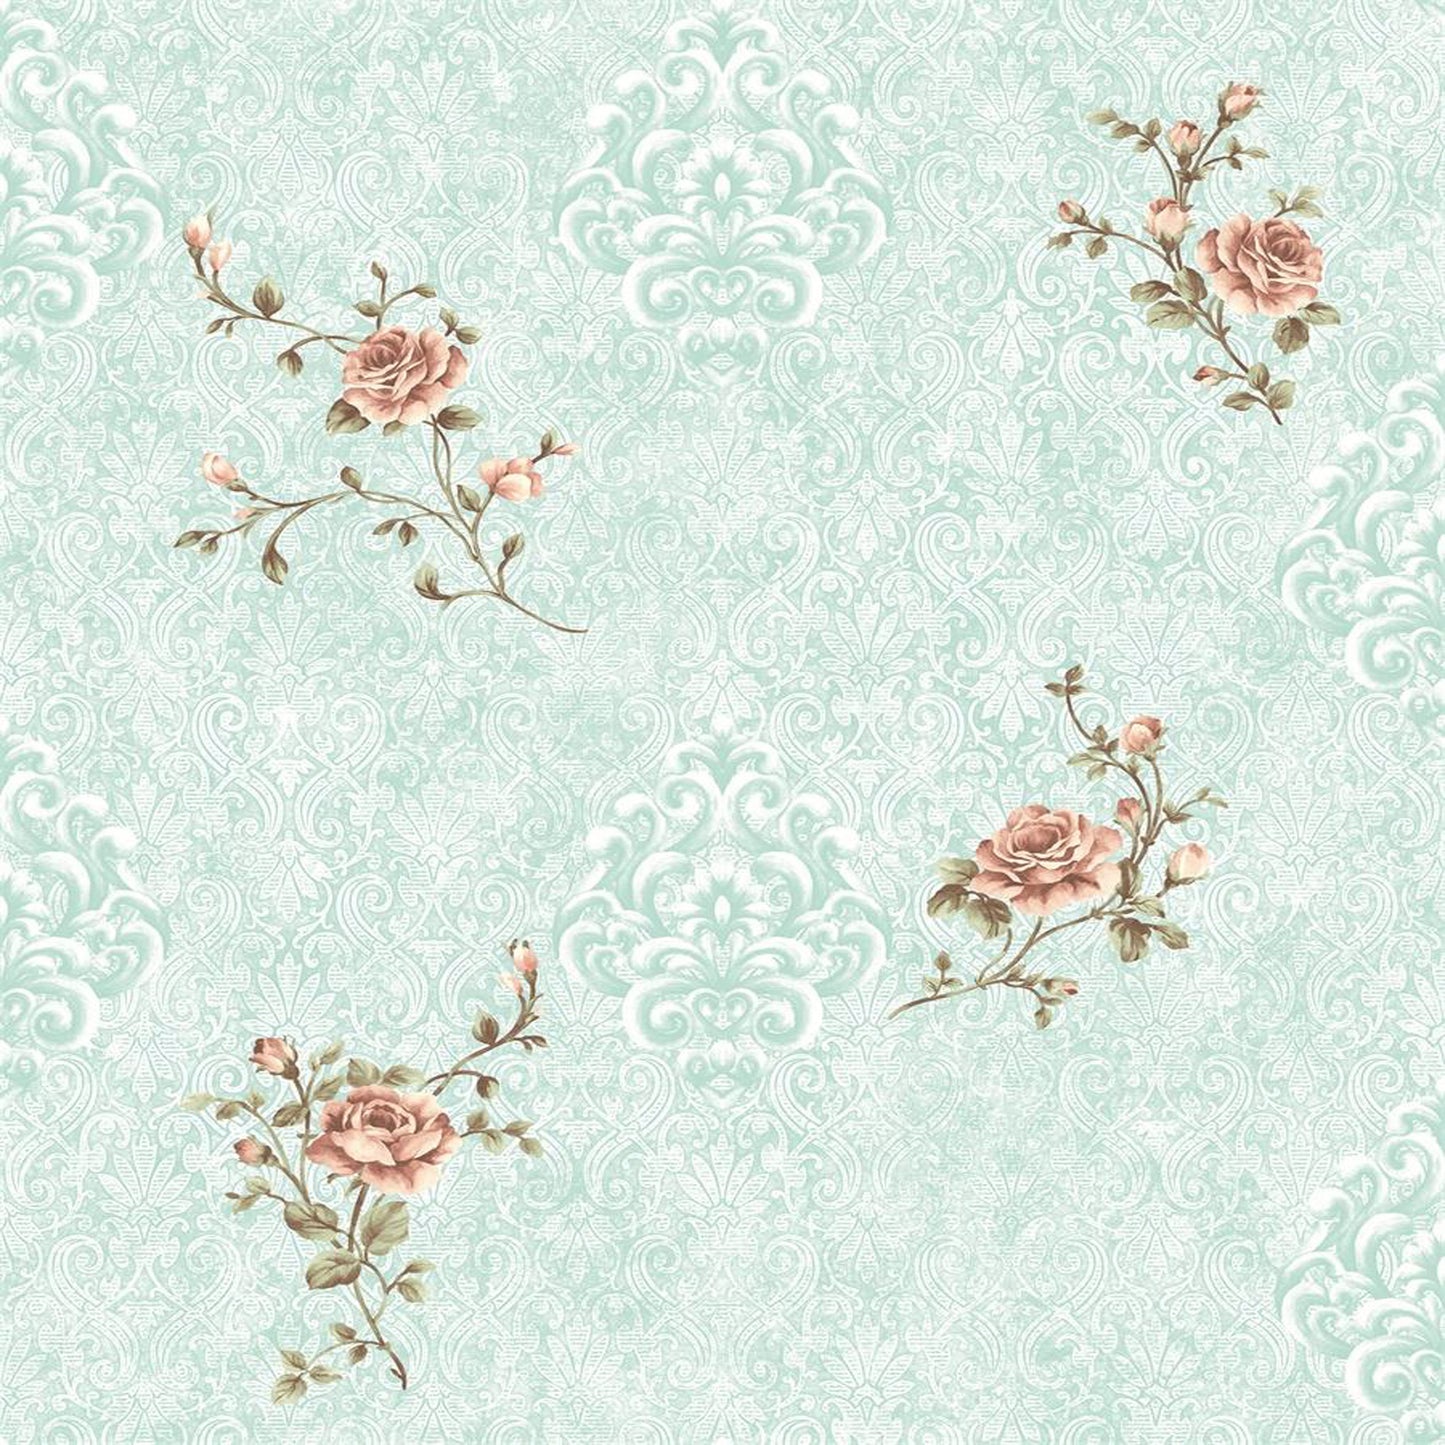 Retro Floral Regency Wallpaper Design